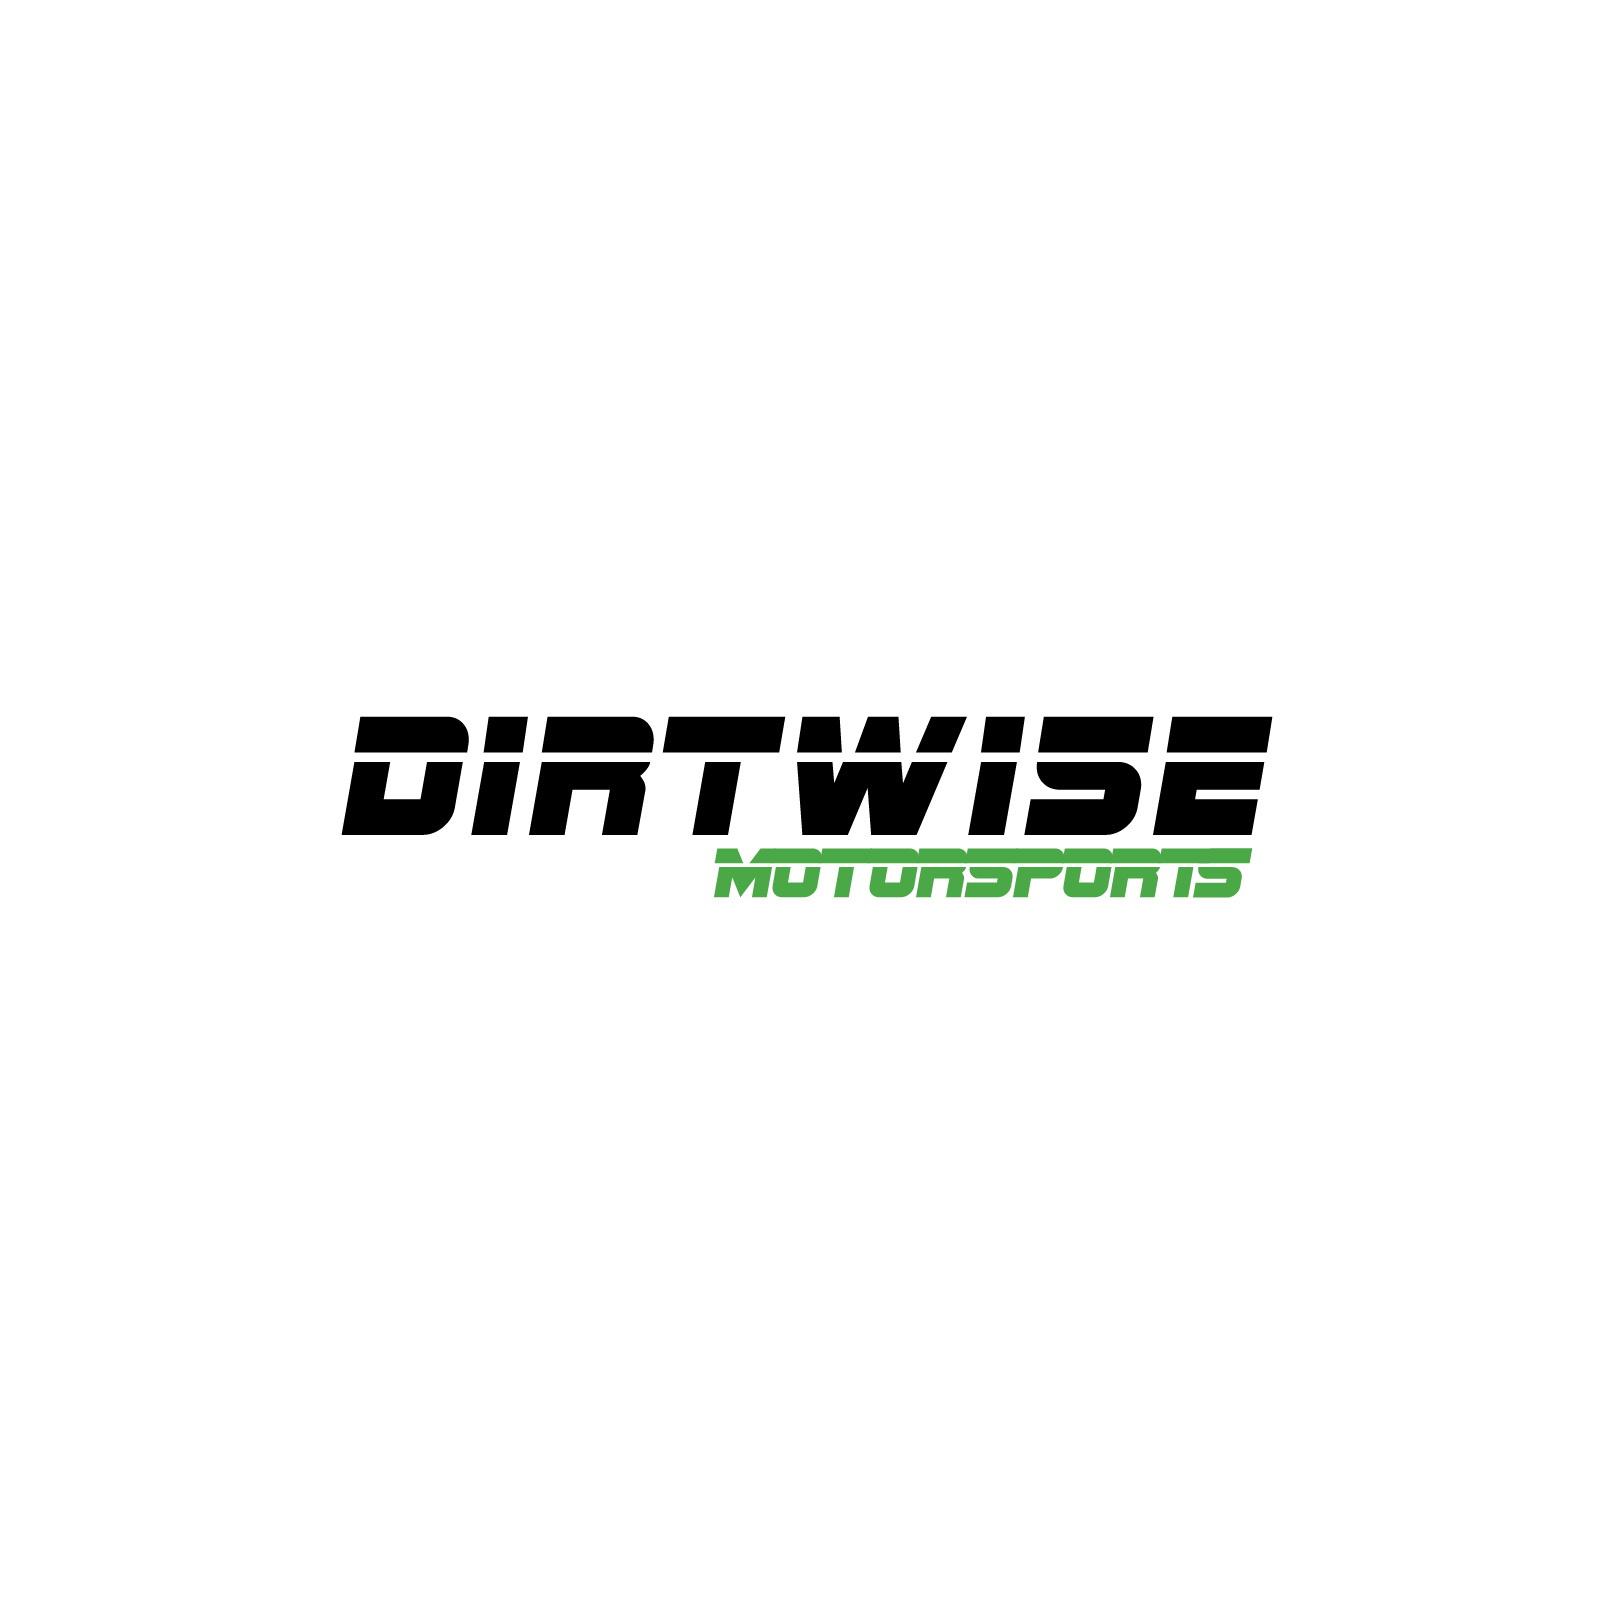 Dirtwise Motorsports